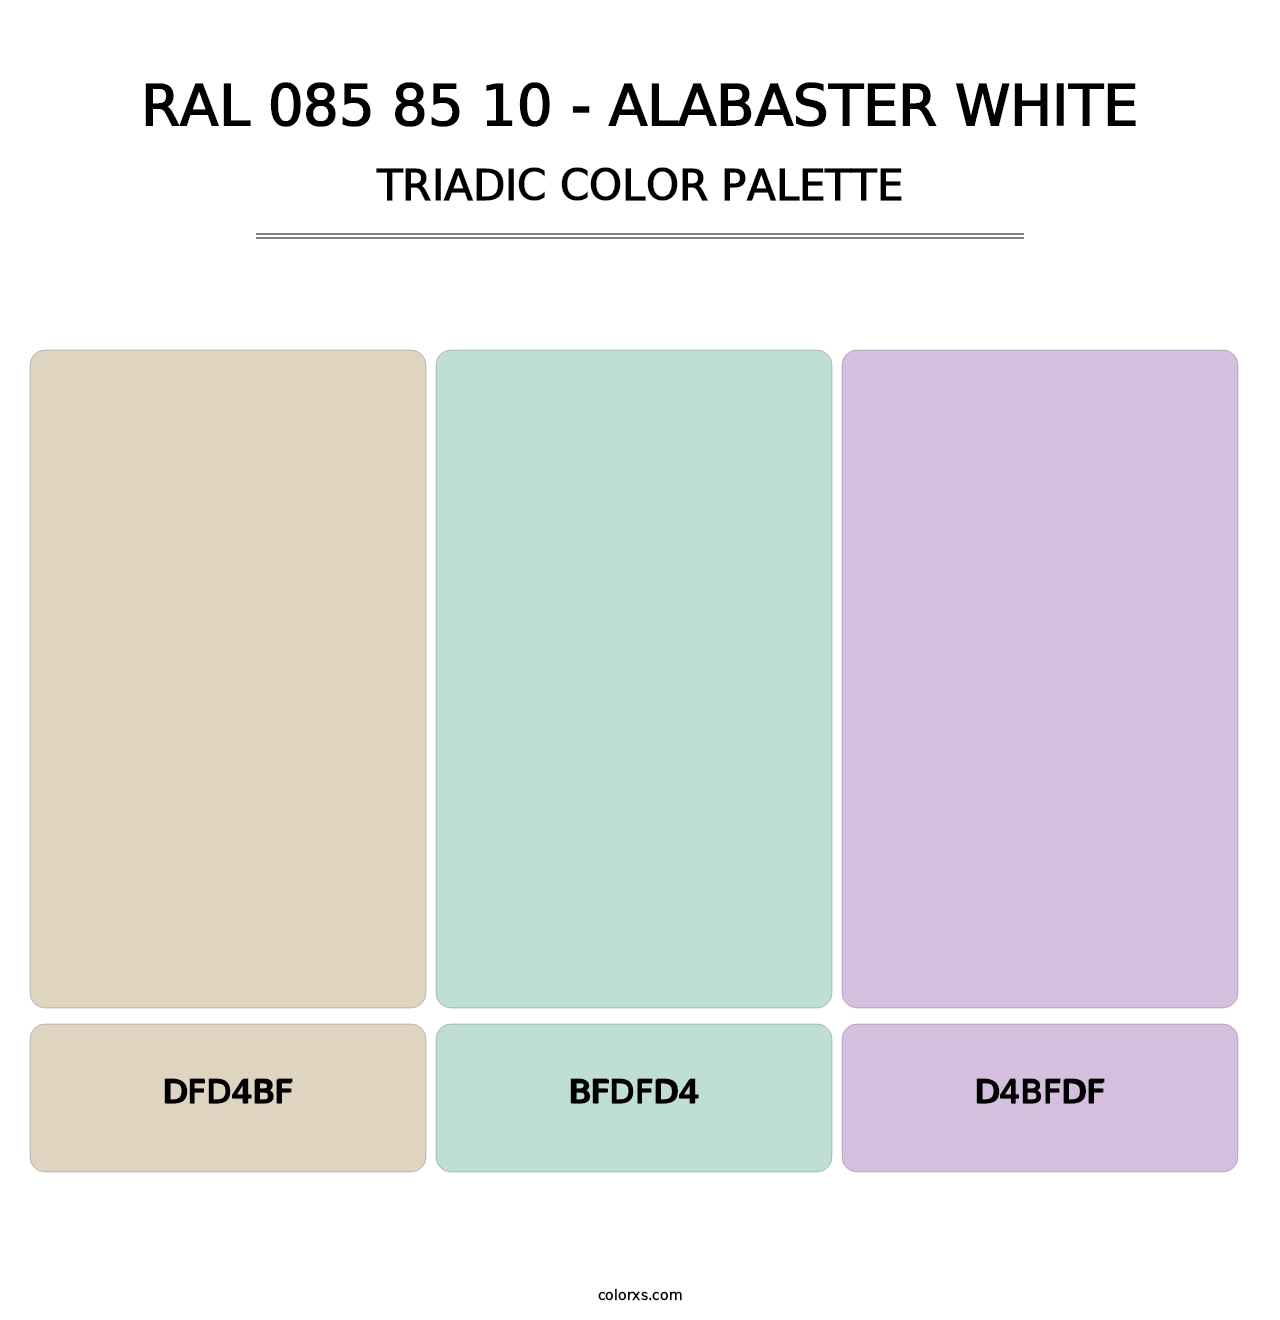 RAL 085 85 10 - Alabaster White - Triadic Color Palette